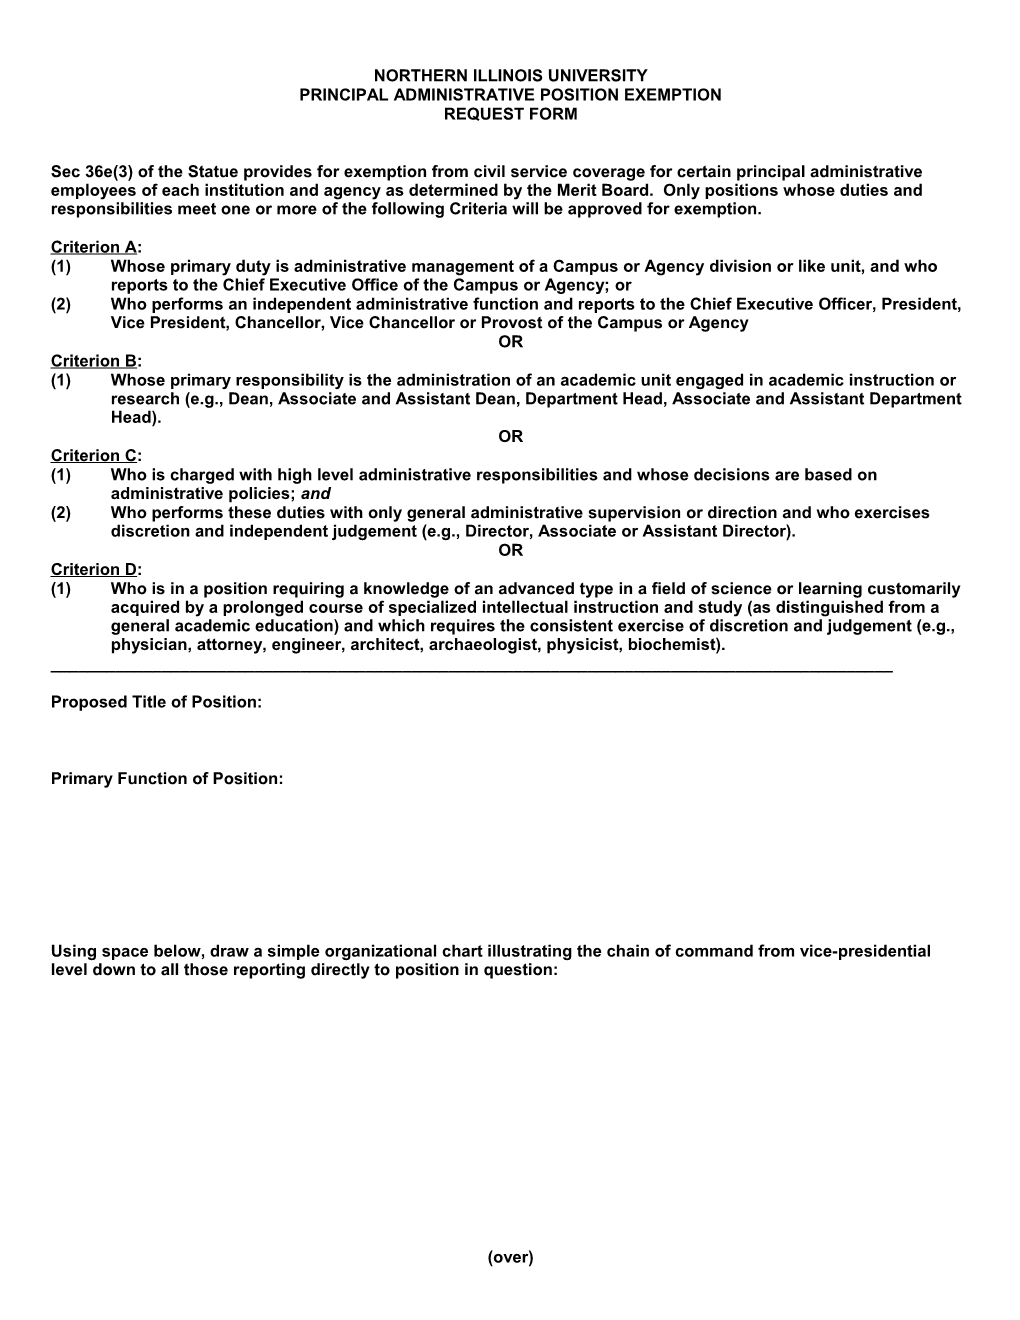 Principal Administrative Position Exemption